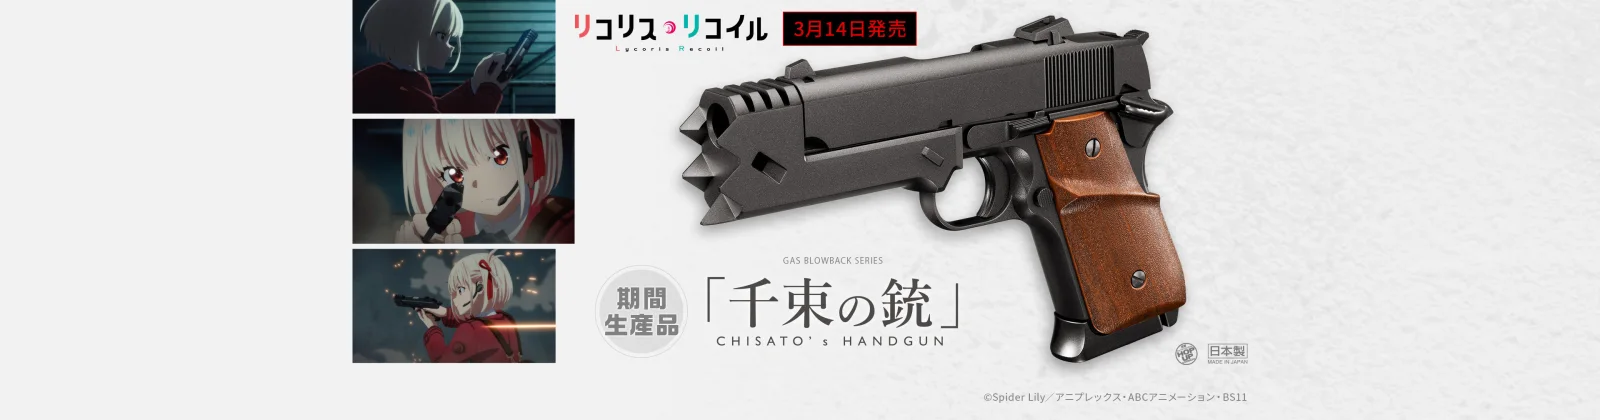 Tokyo Marui推出《莉可丽丝》“千束之枪”气枪模型